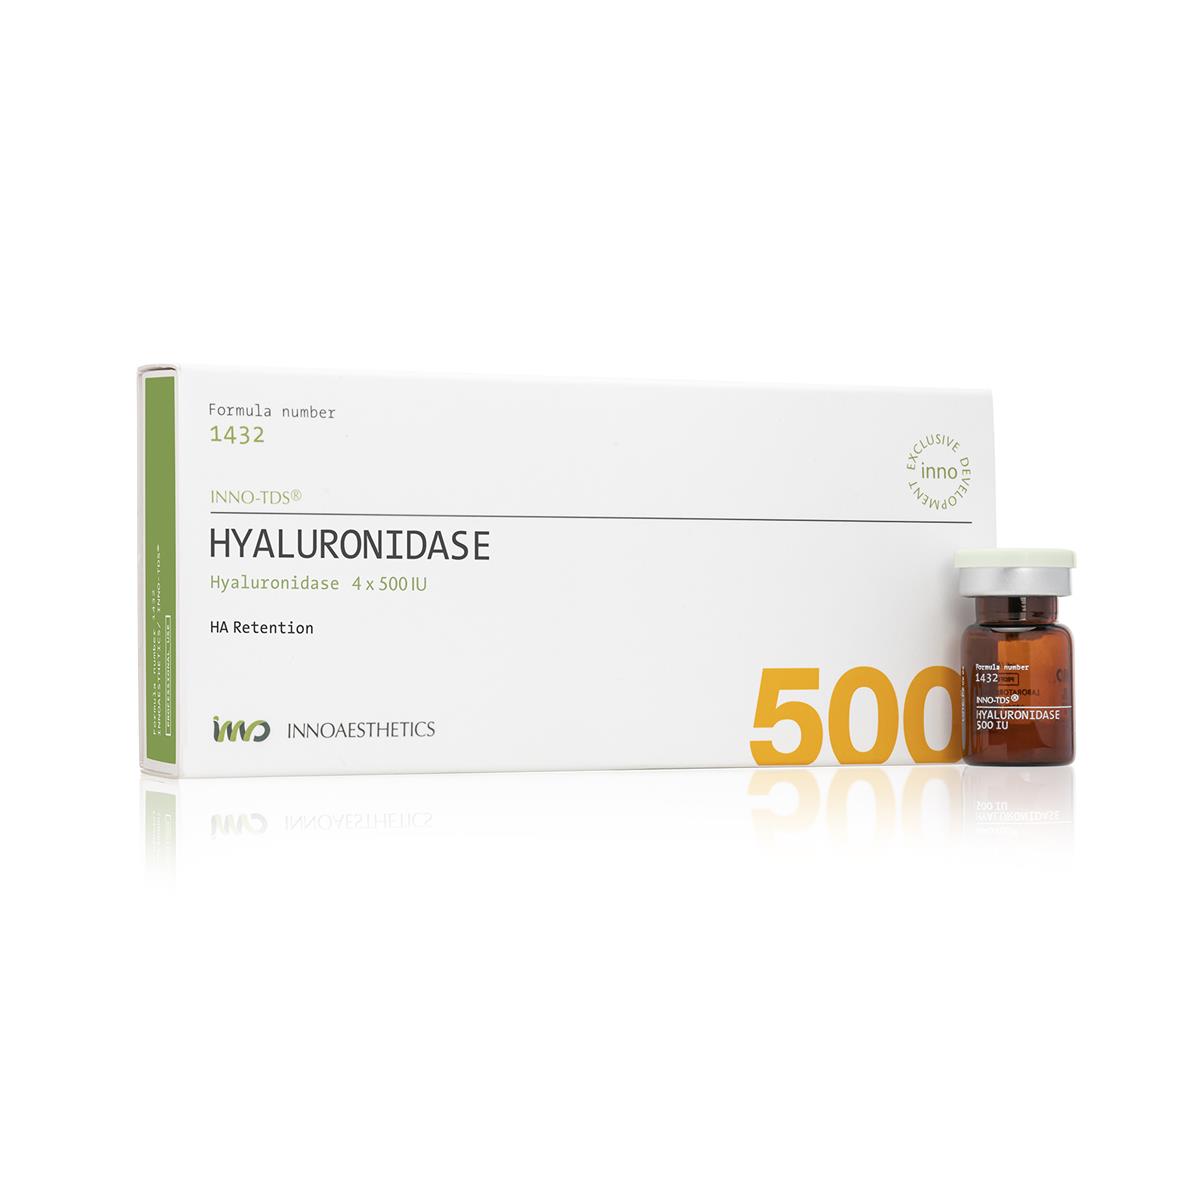 INNO-TDS Hyaluronidase 4 x 5 ml